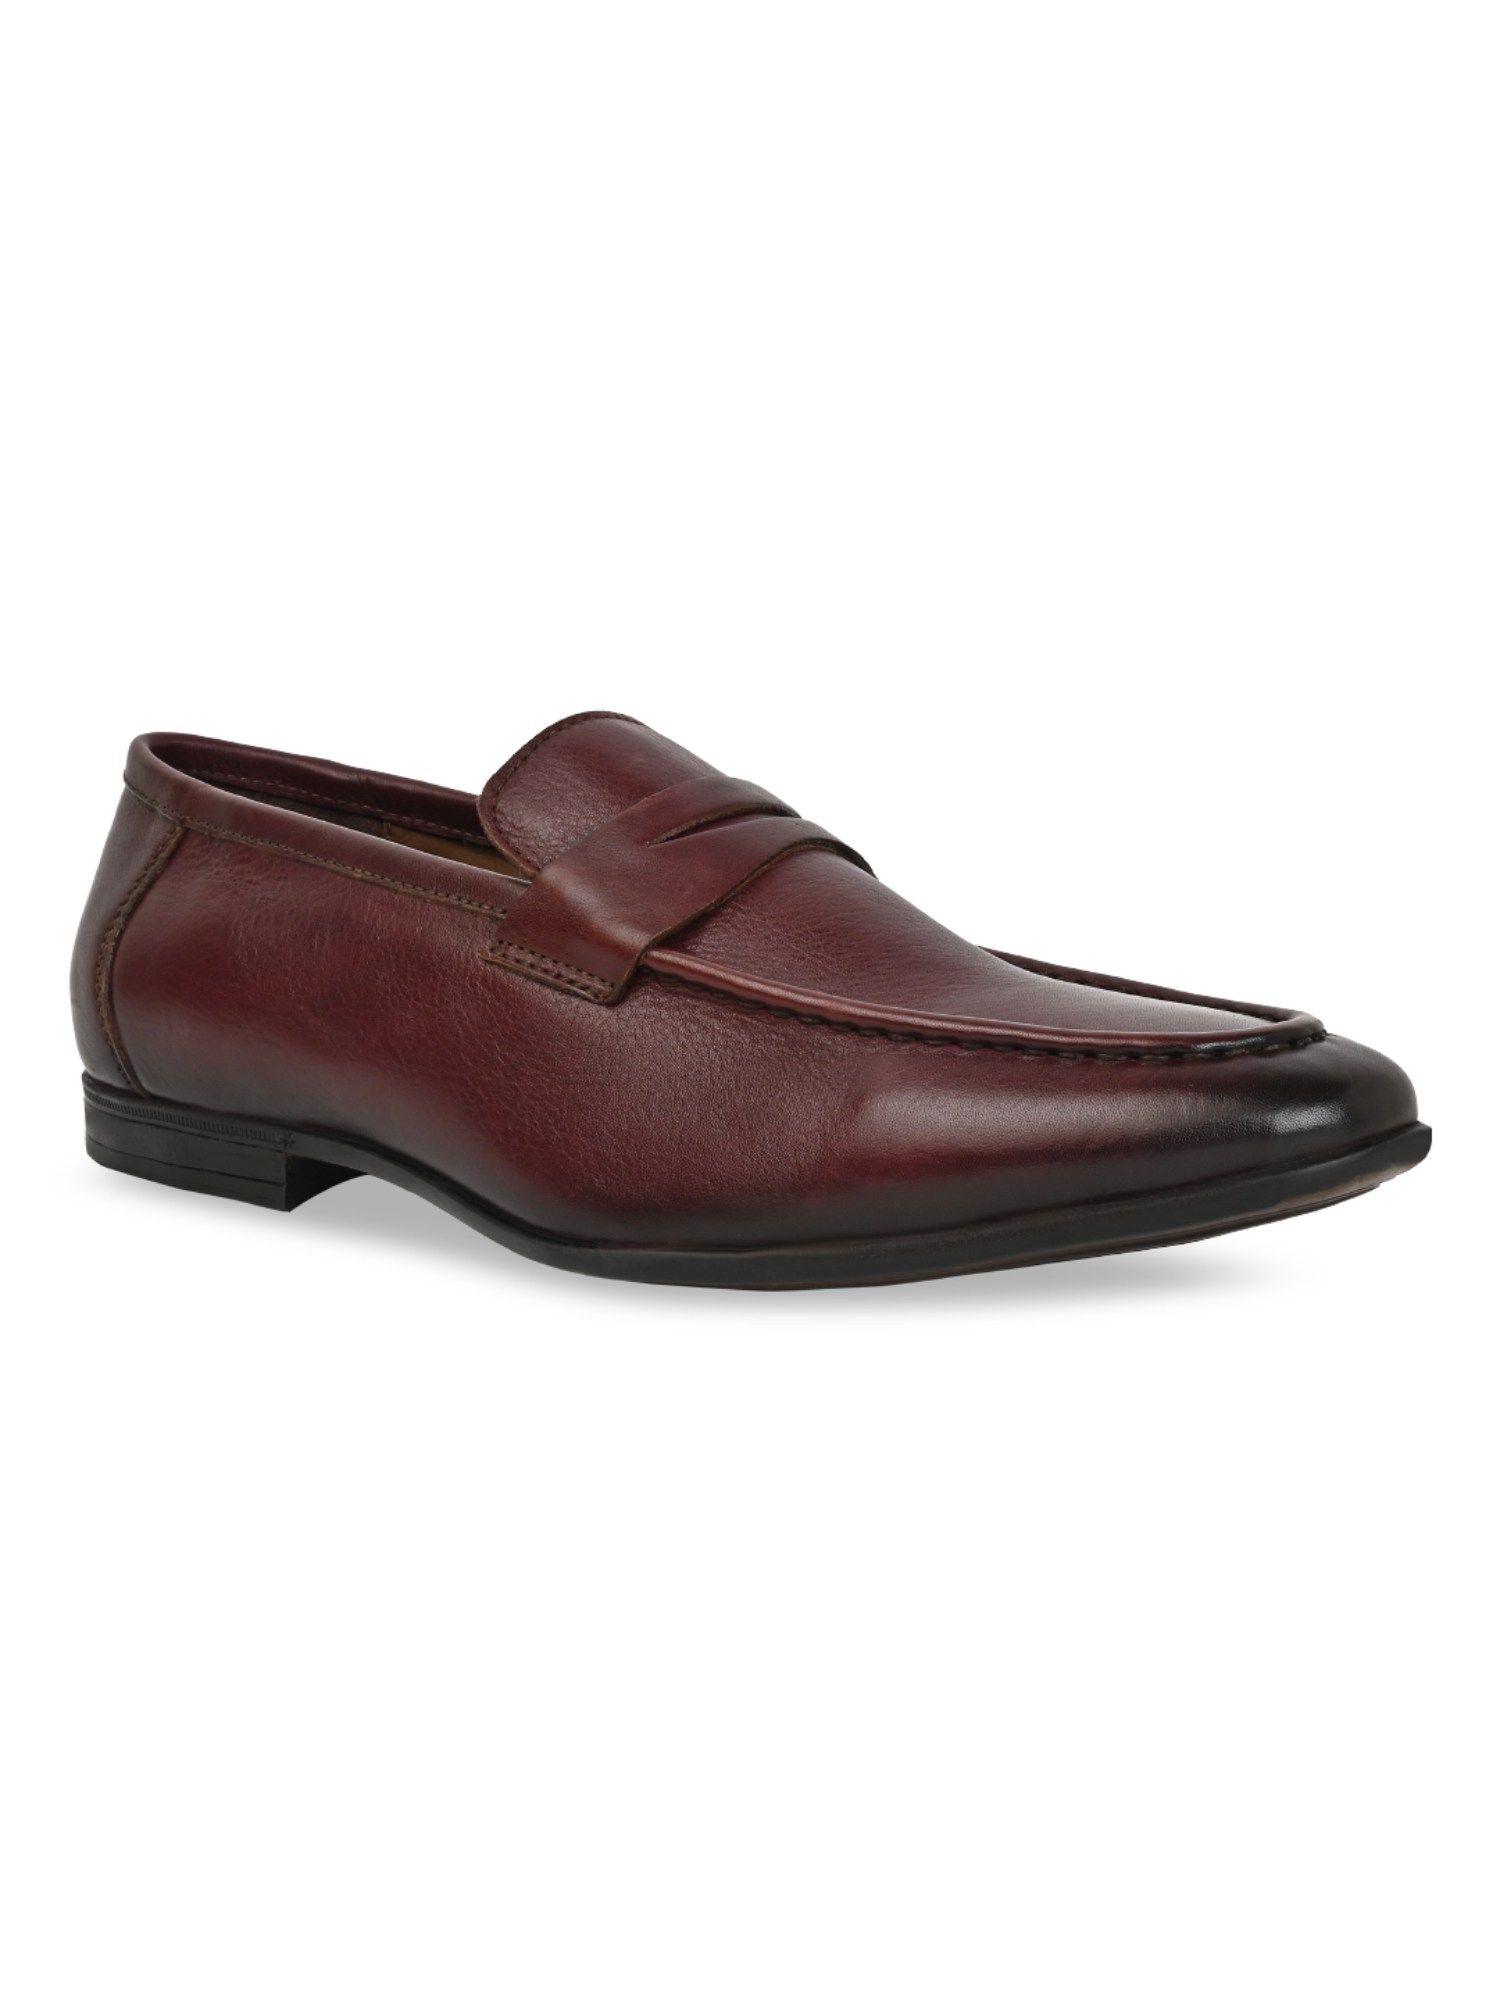 bordon-men-leather-slip-on-moccasins